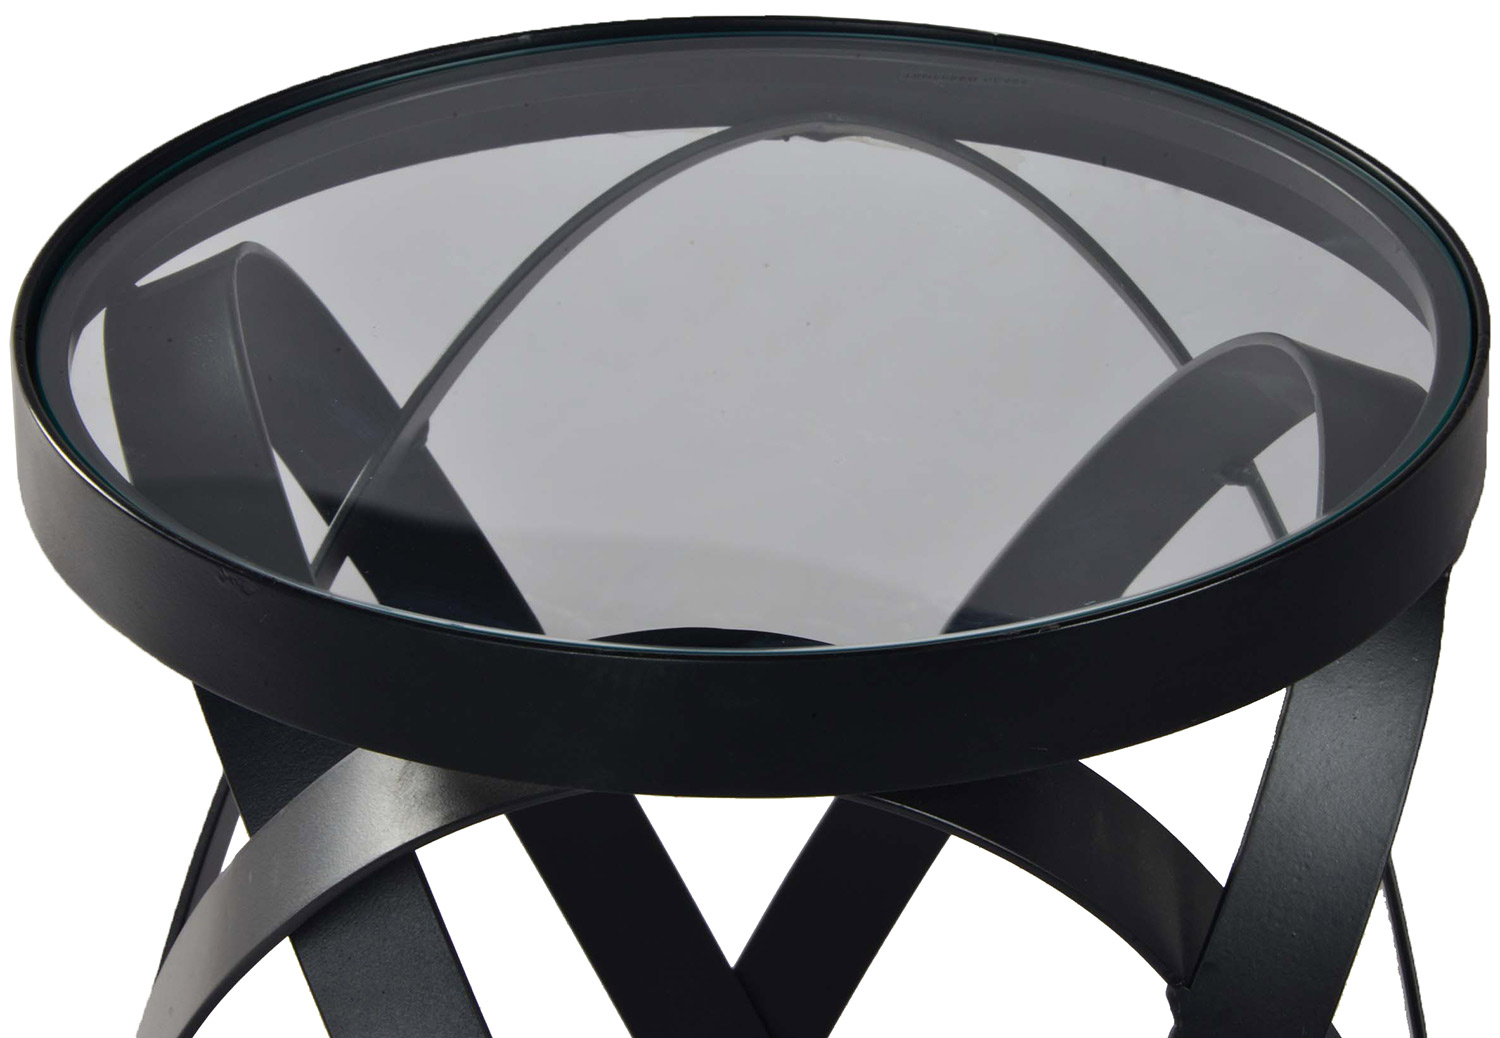 Ren-Wil Lustre Side Table - Black